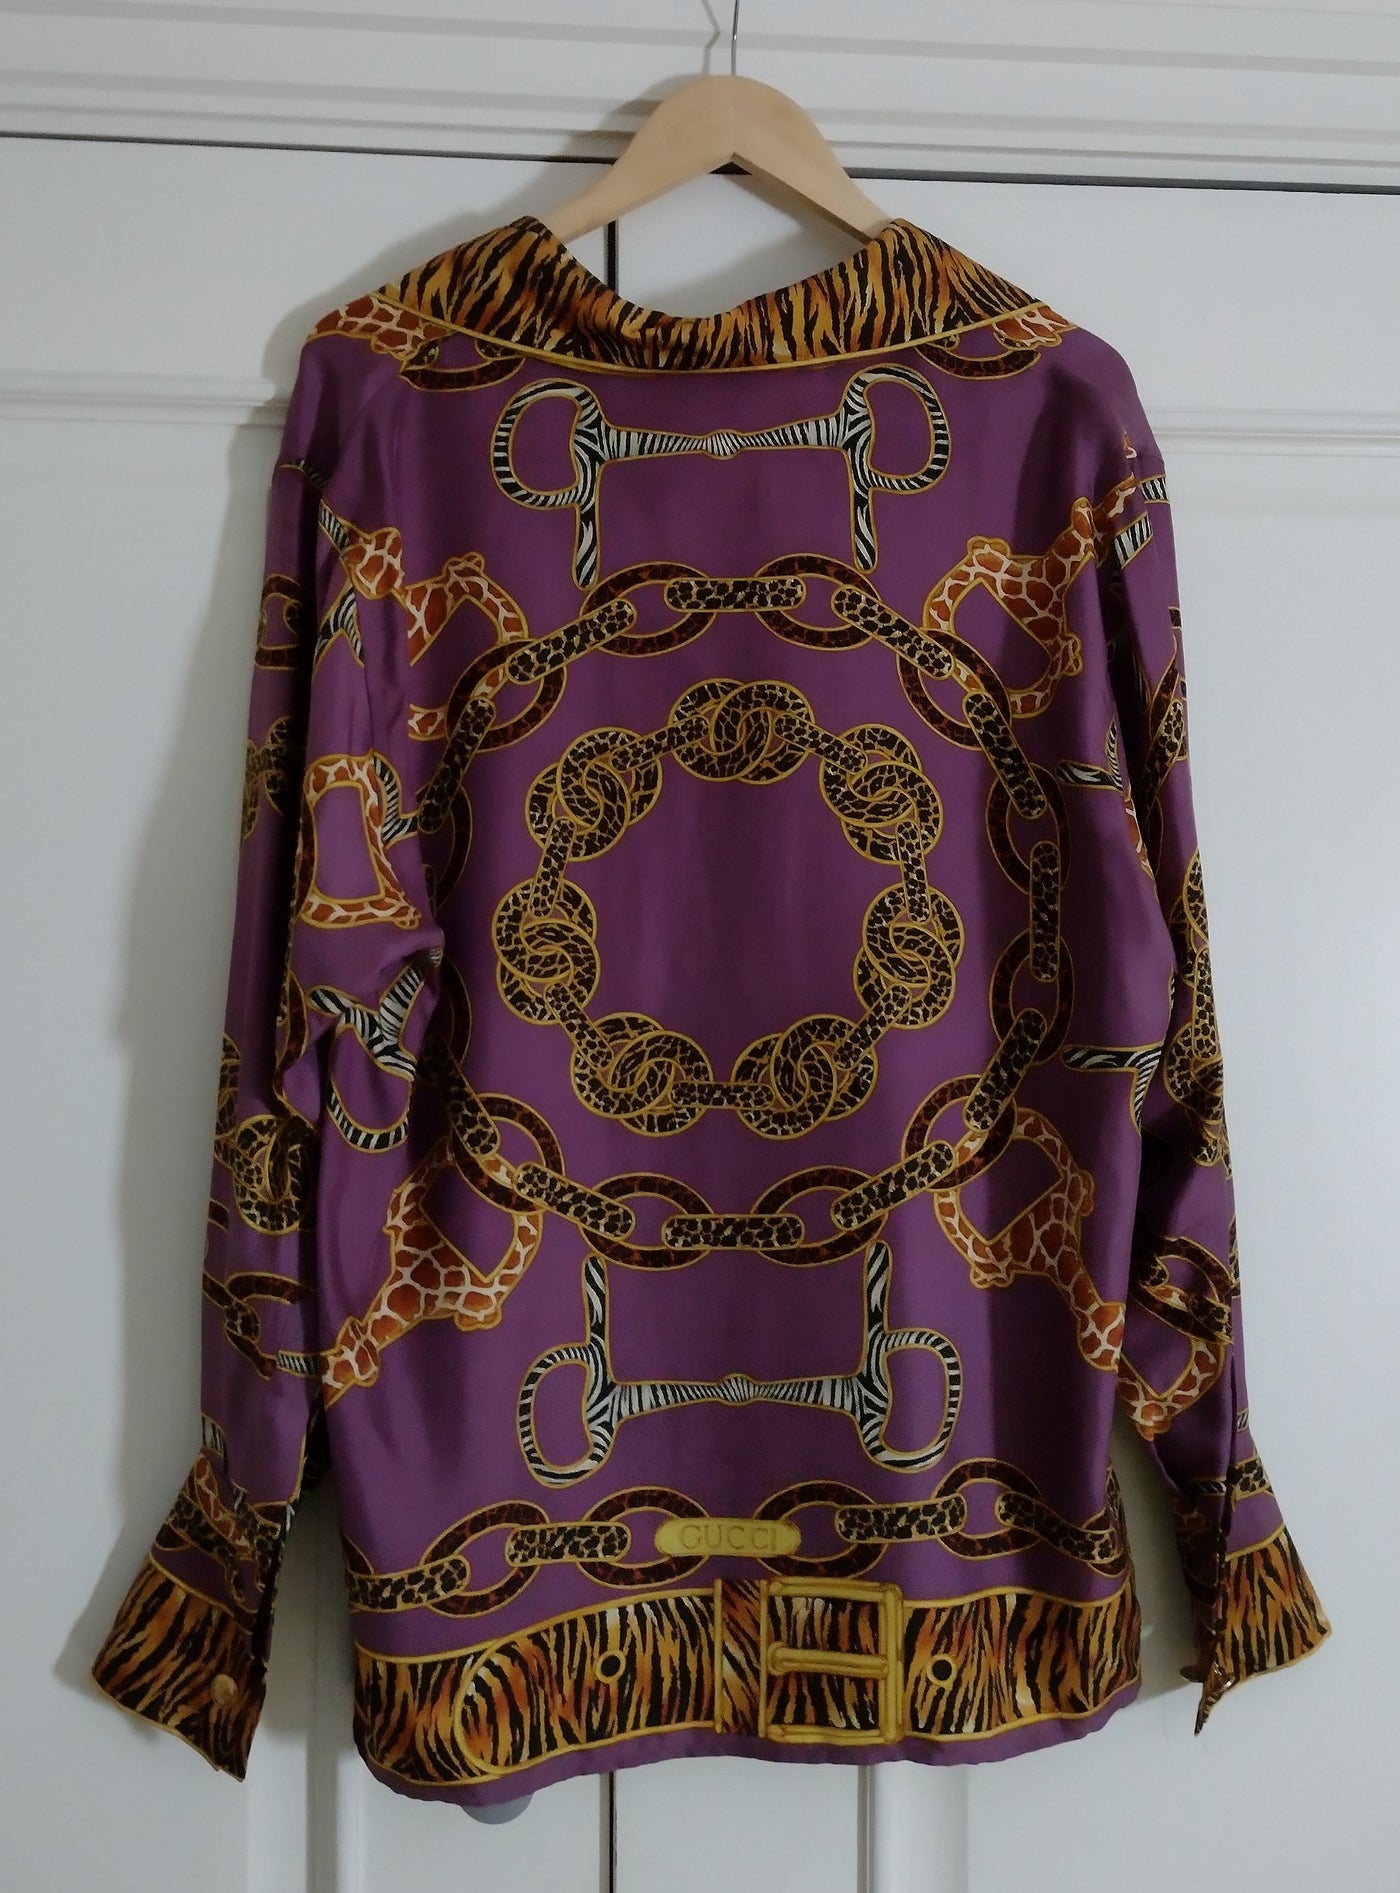 Gucci Rare Vintage 1992 Silk Blouse size 44